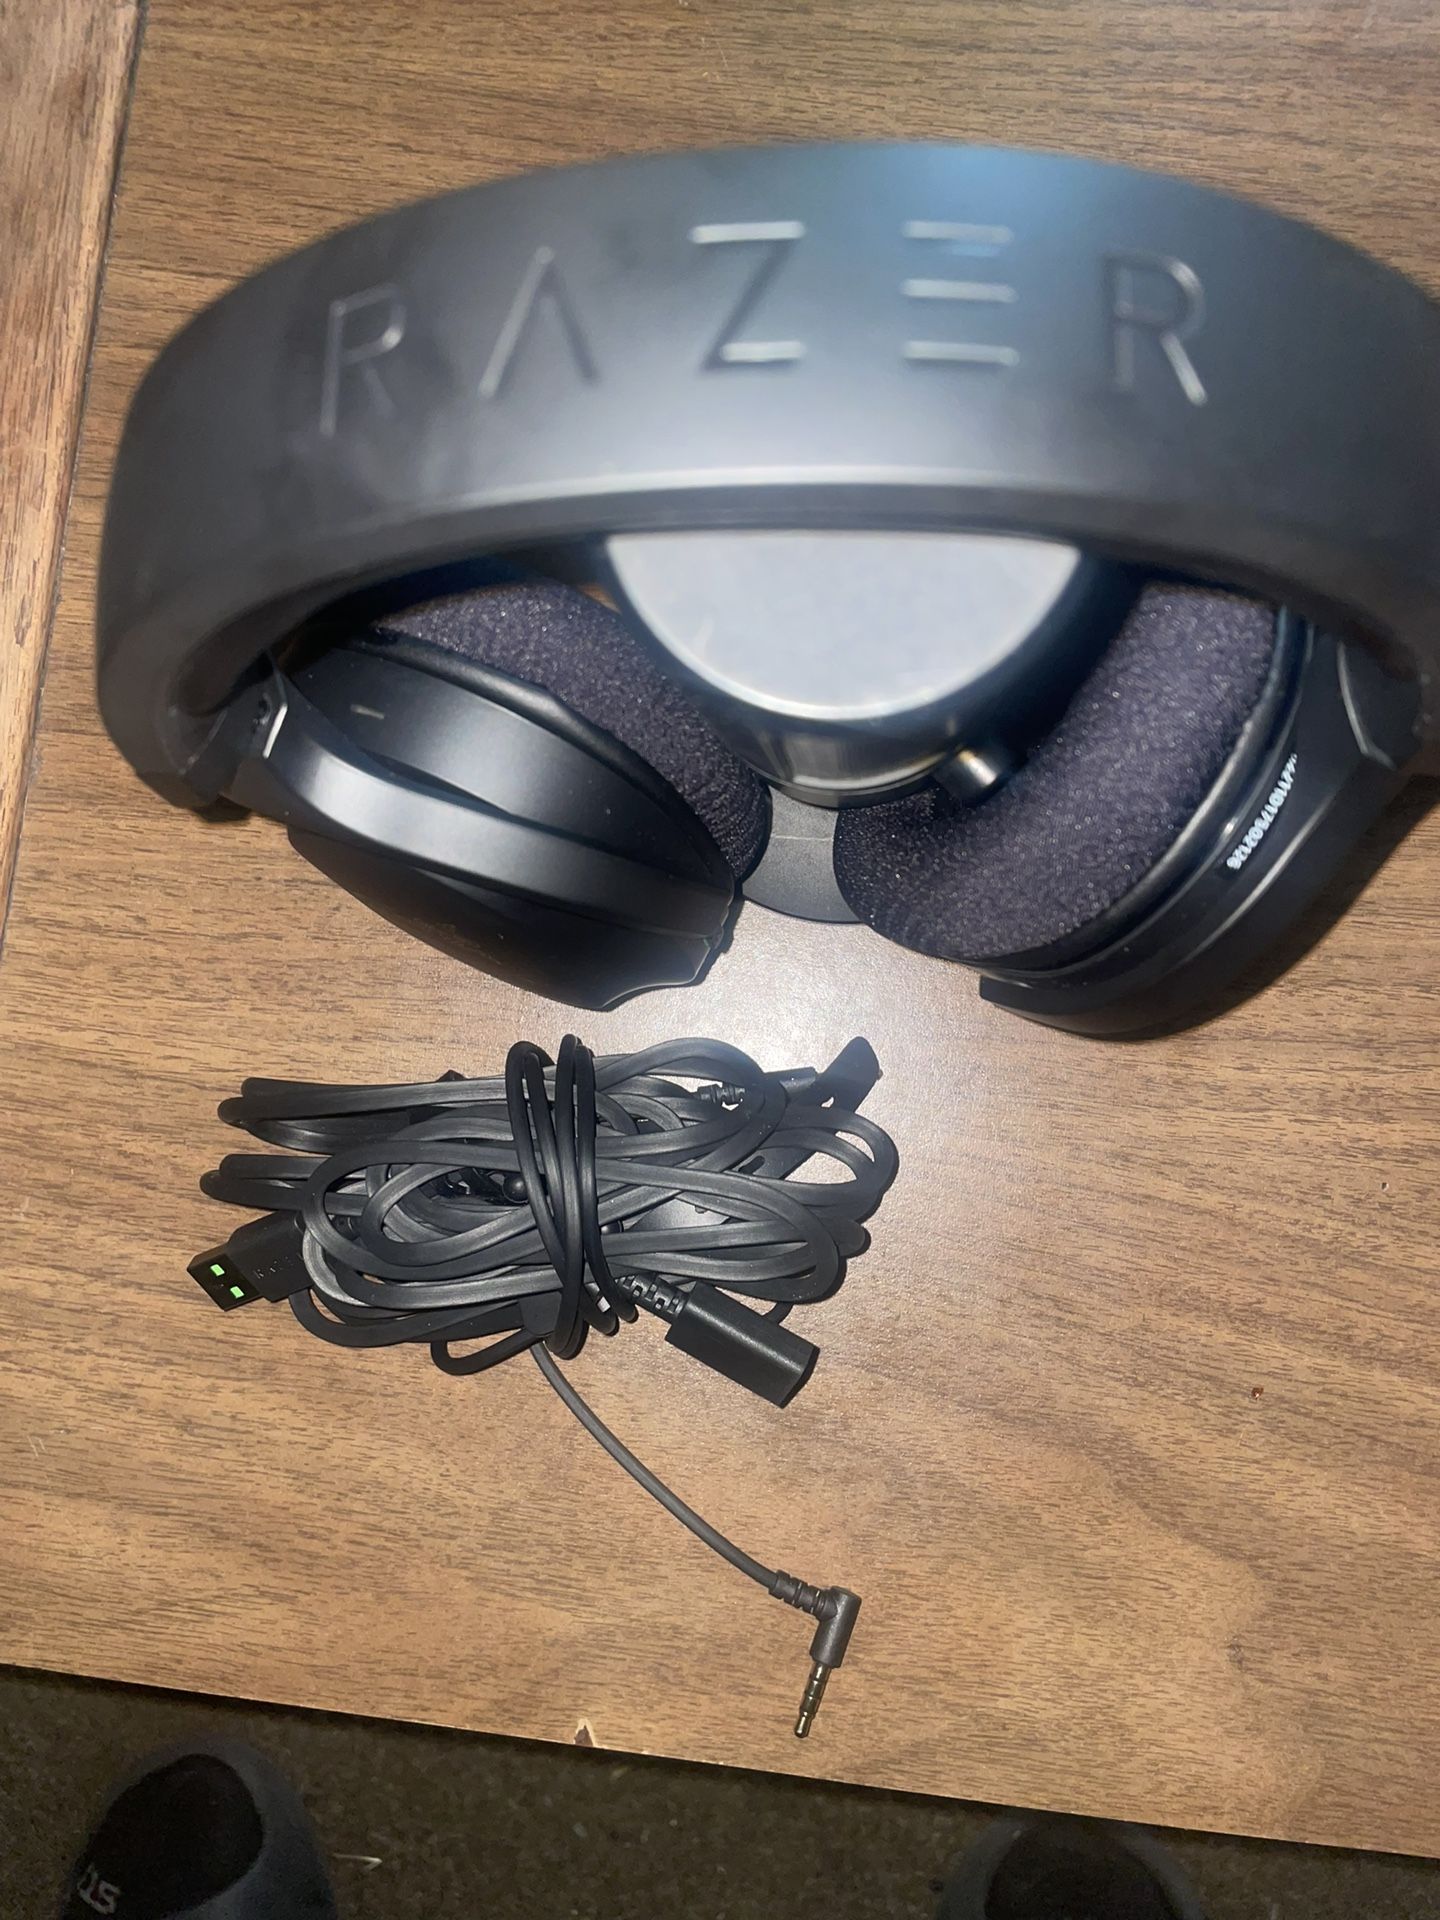 RAZER headset plus streaming mic